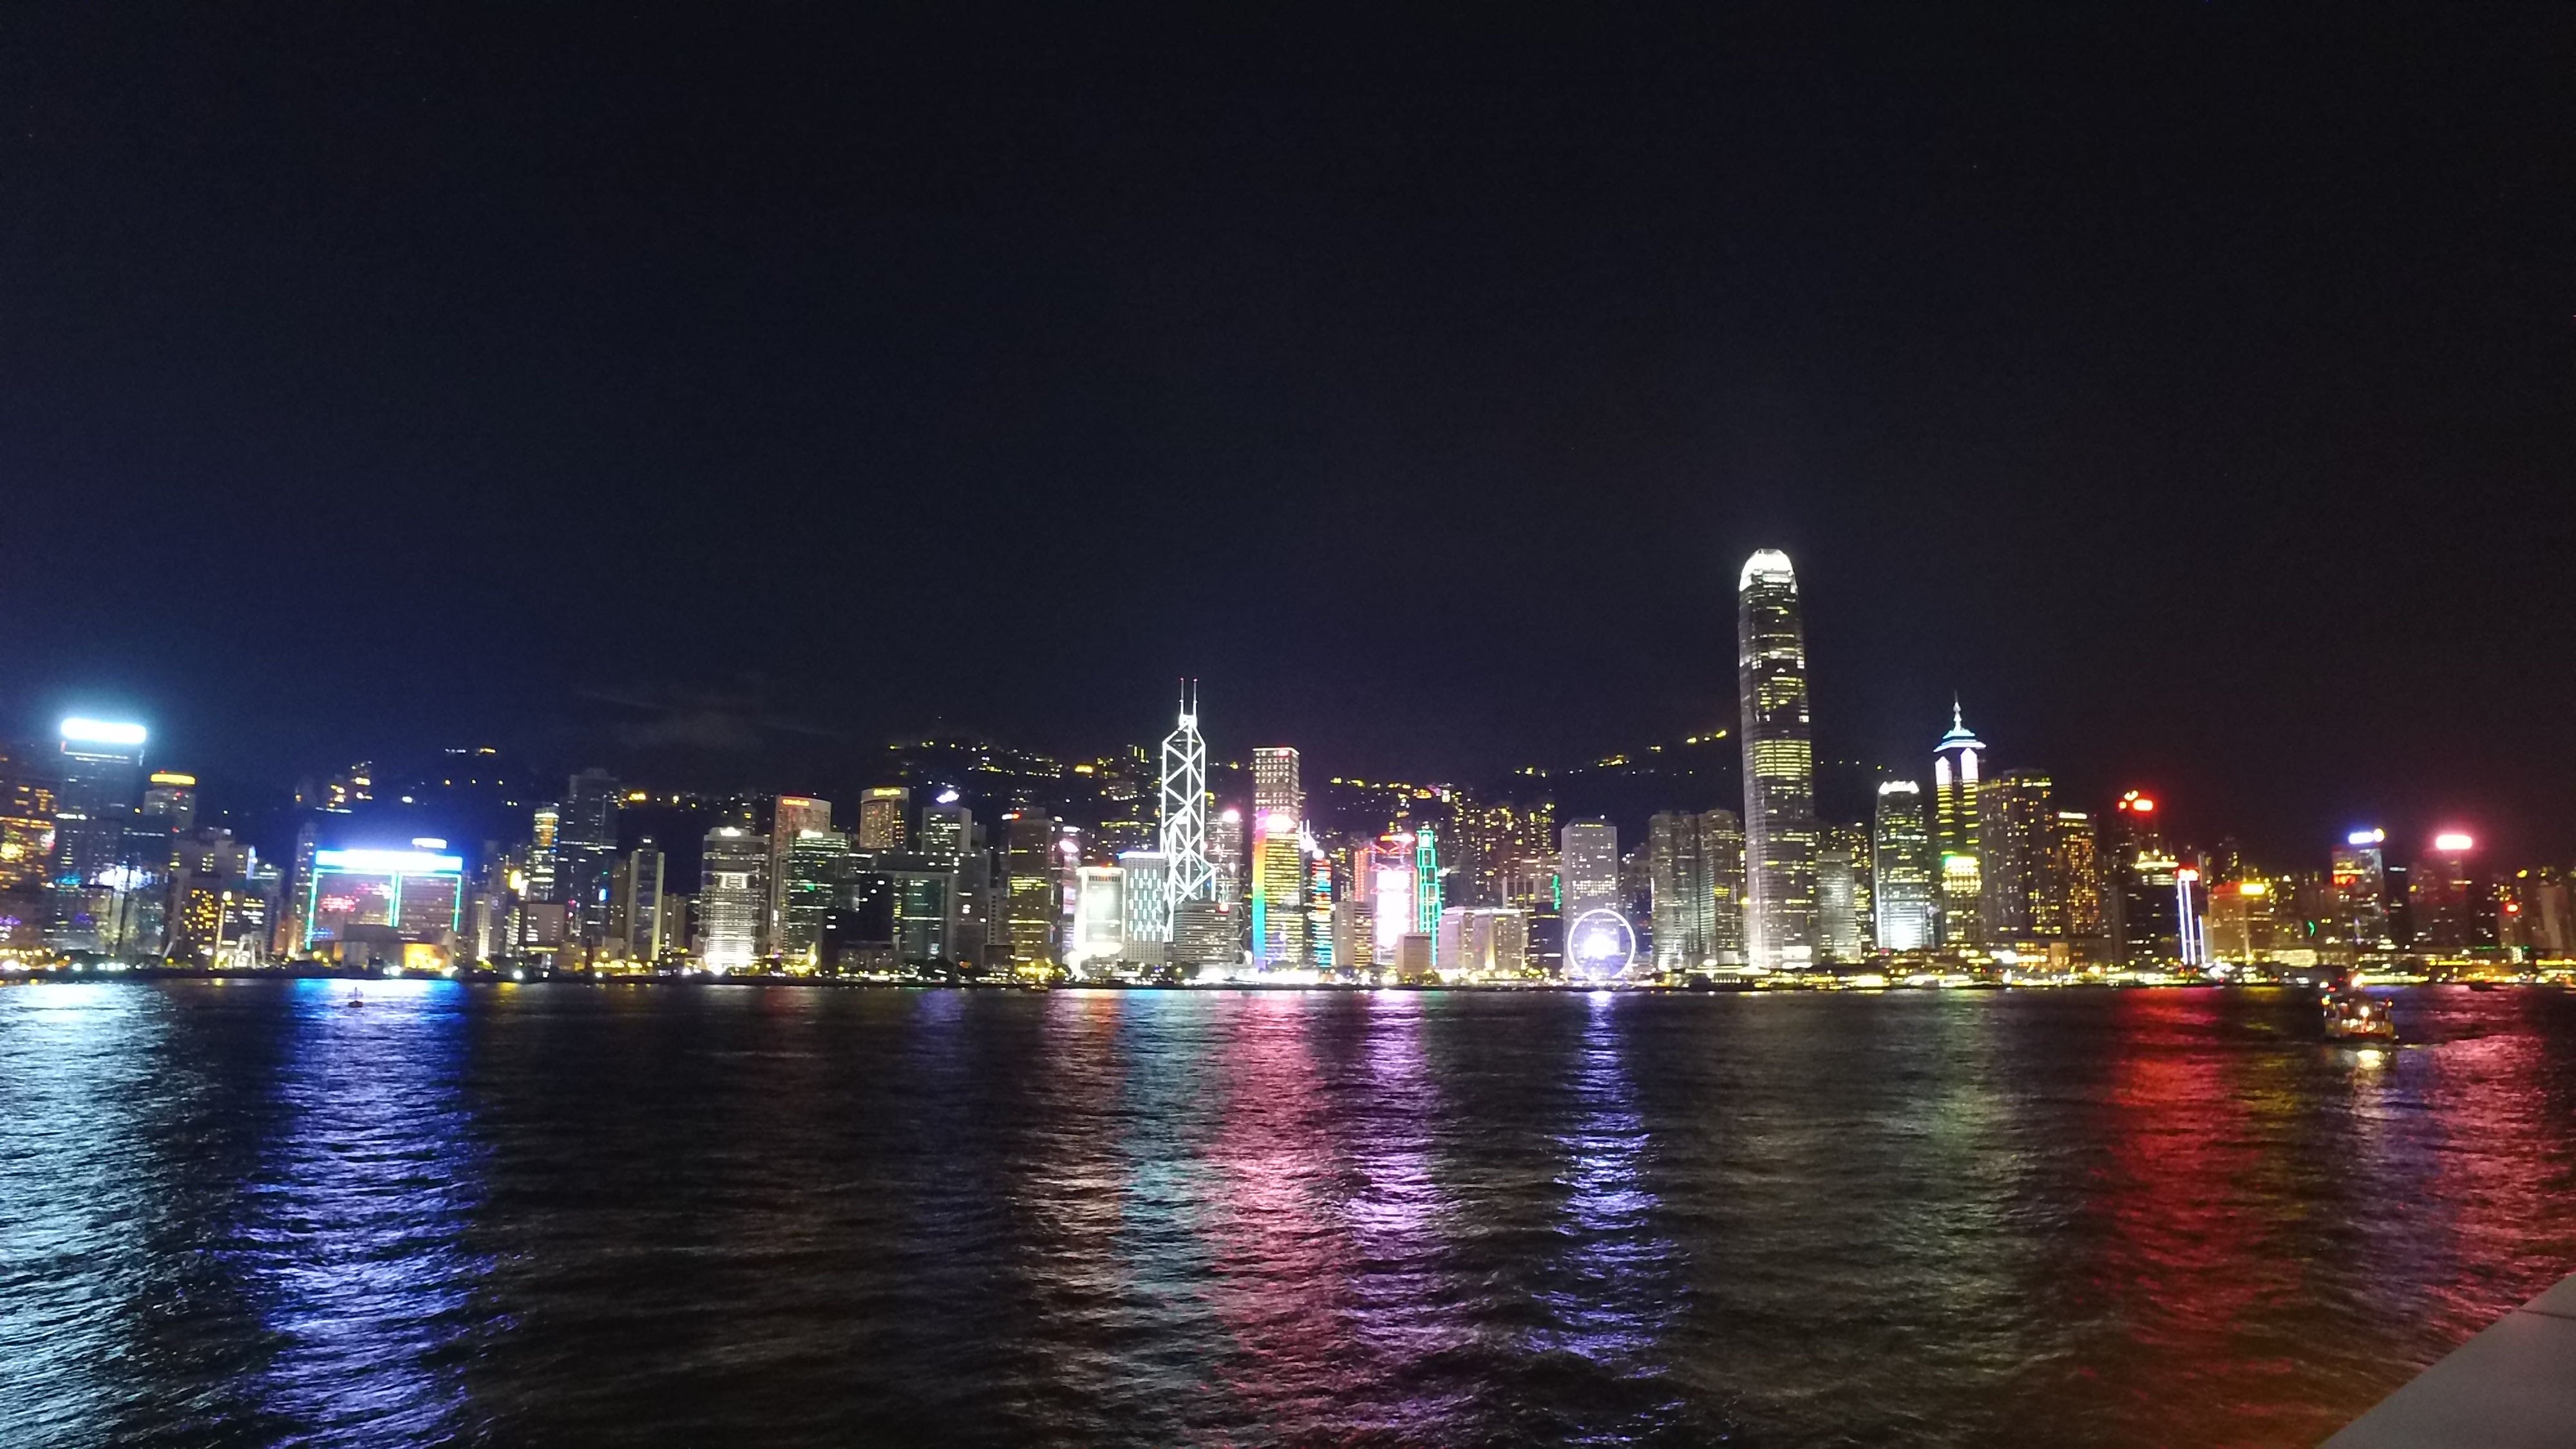 Hong Kong | Victoria Harbour By Night (Tsim Sha Tsui) in 4K - YouTube